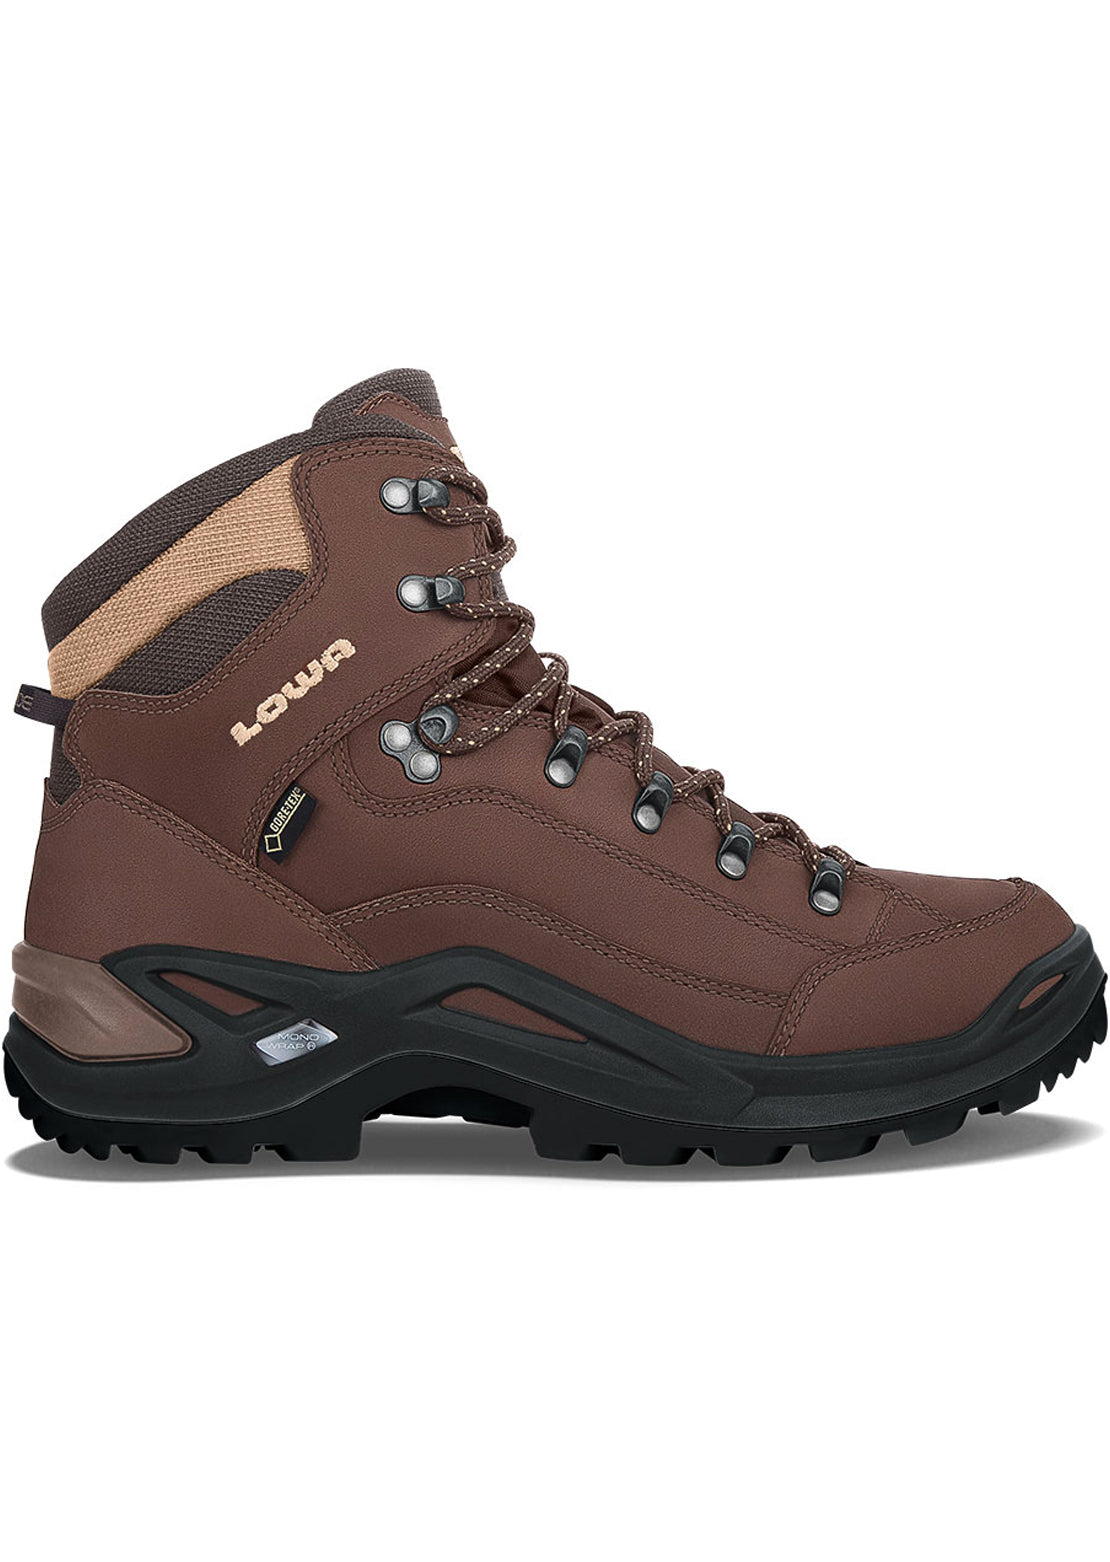 Lowa Men’s Renegade GTX Mid Hiking Boots Espresso